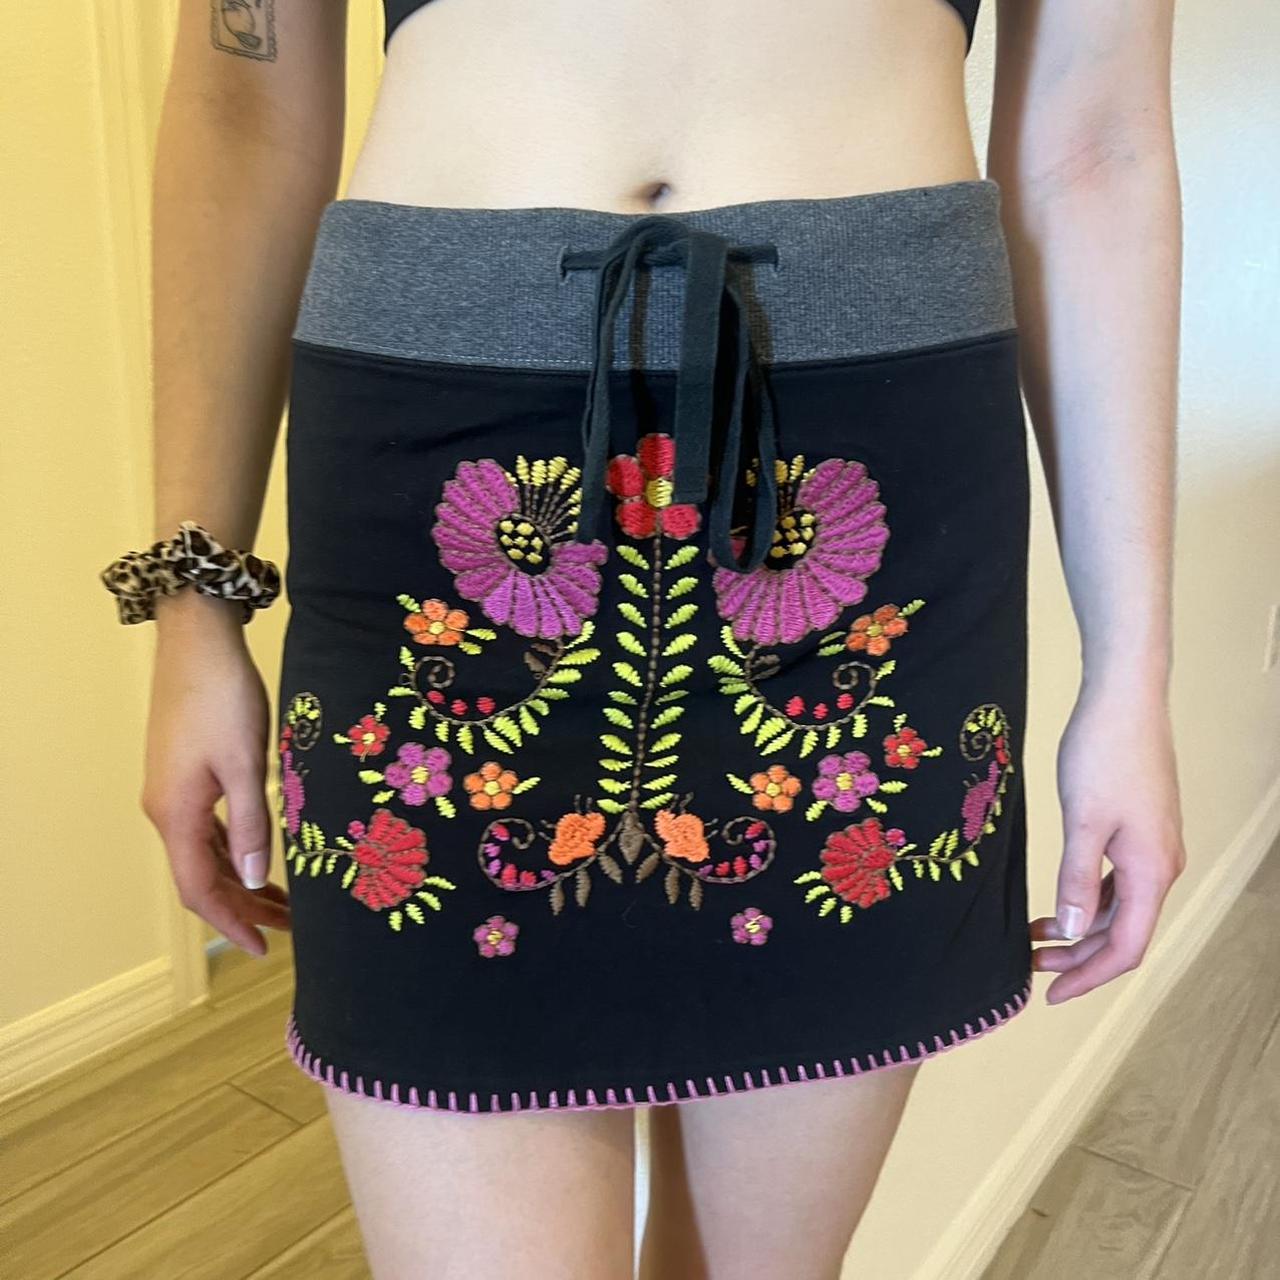 Ivy Jane Floral Embroidered Skirt This Ivy Jane... - Depop